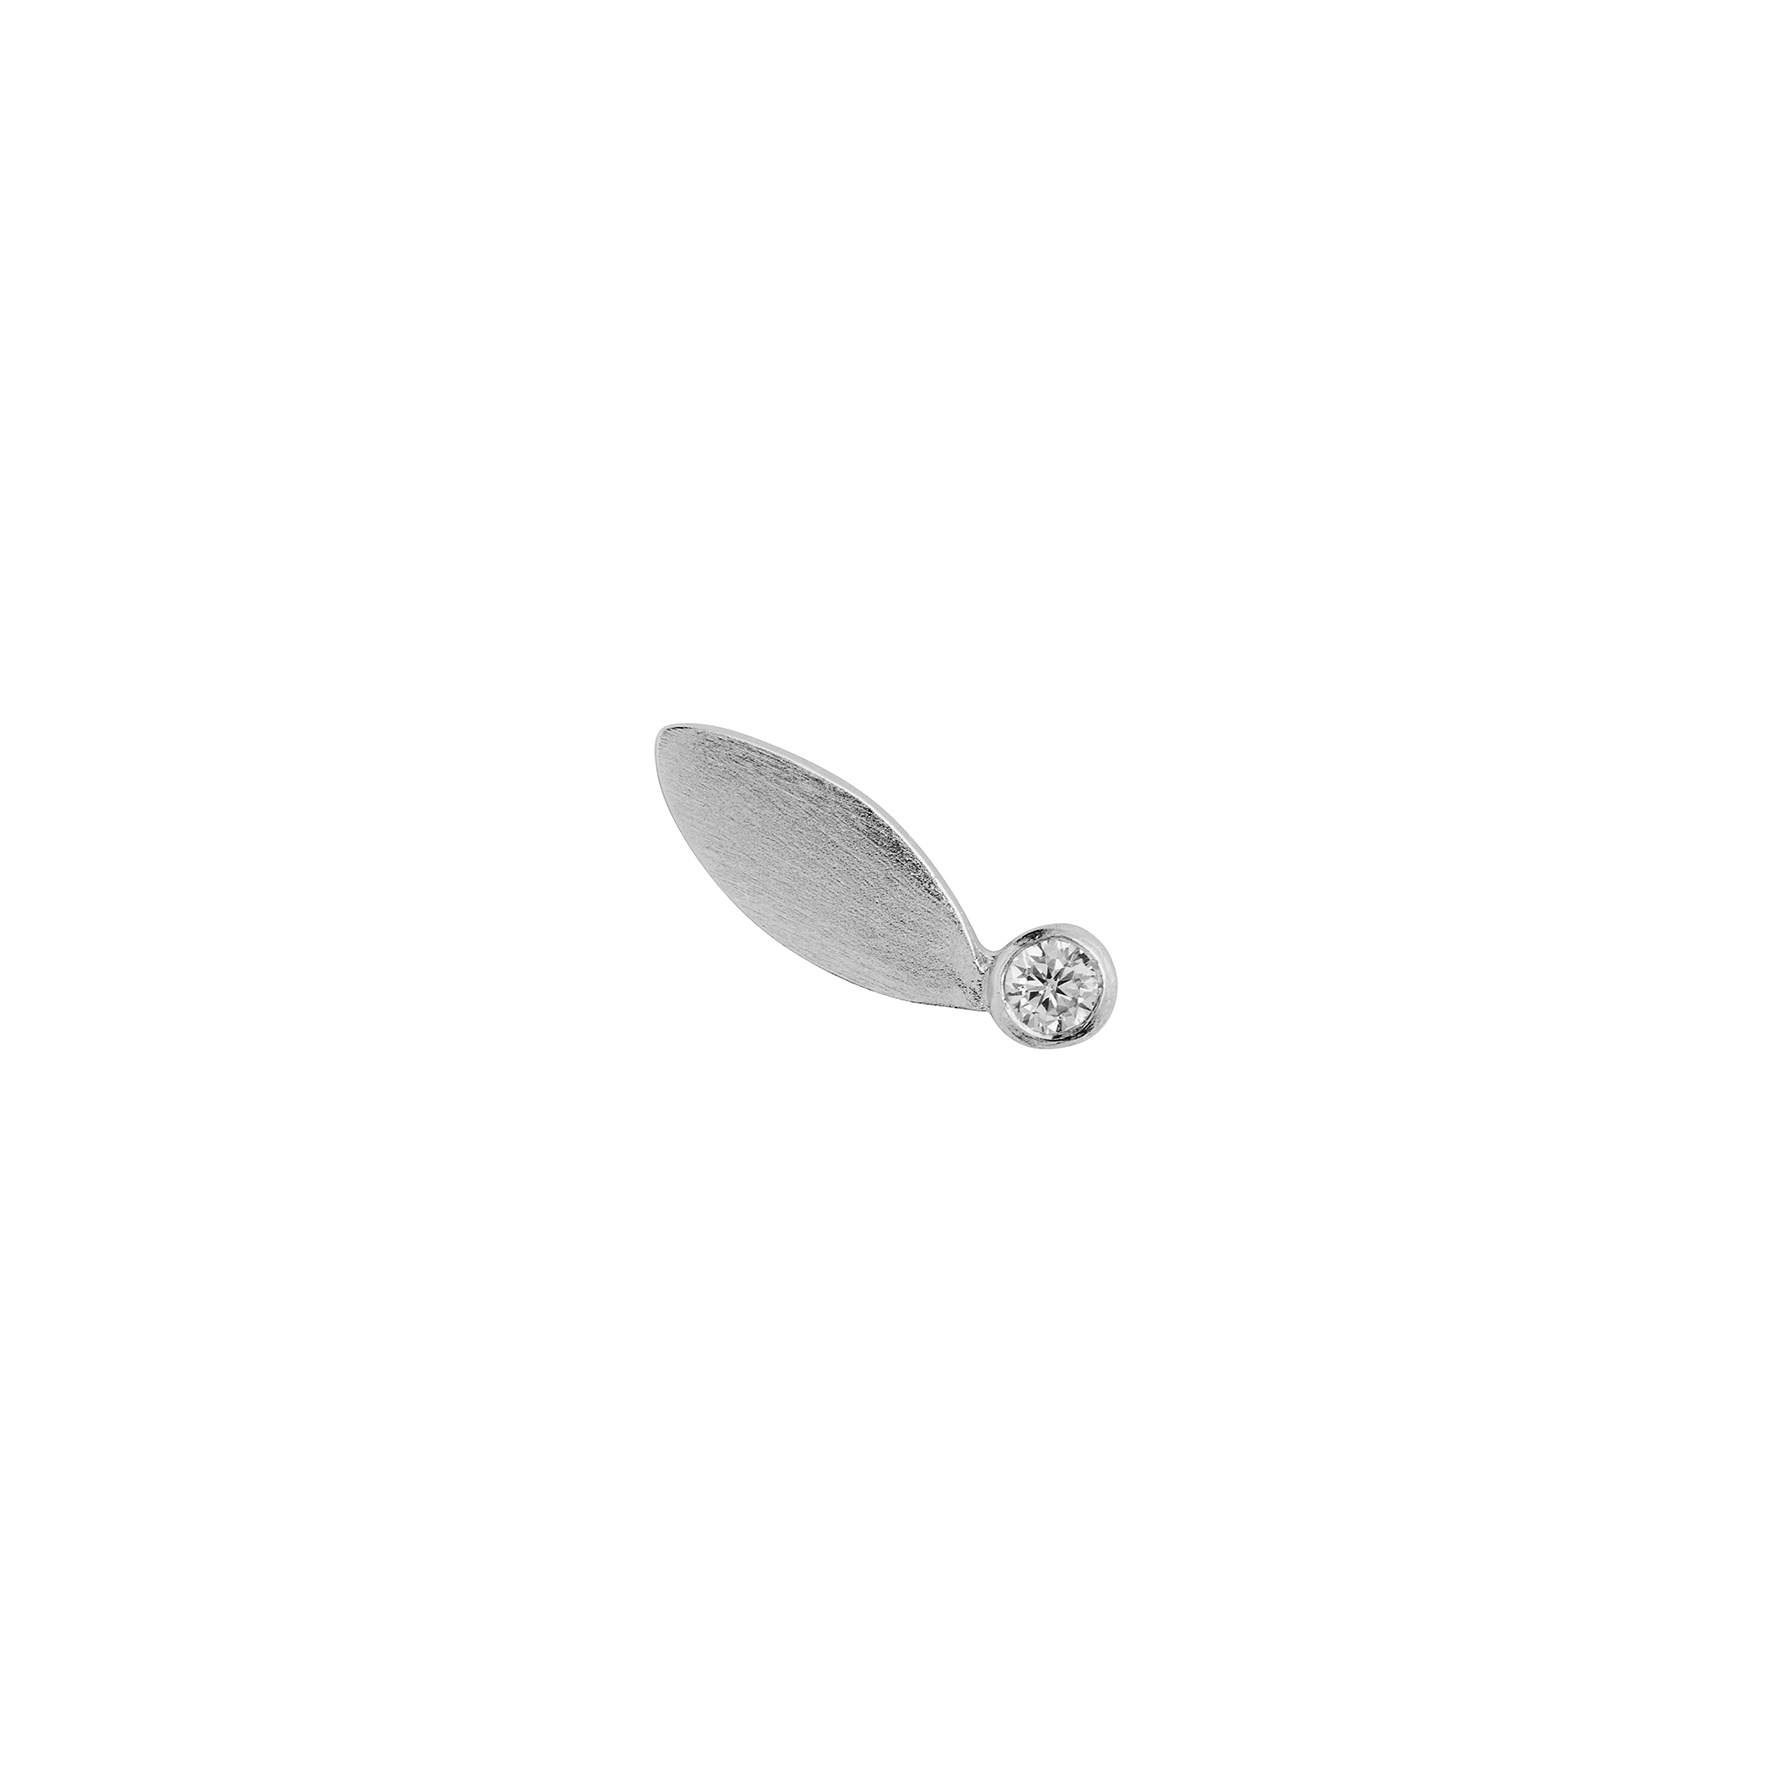 Big Dot Leaf Earstick Light Peridot von STINE A Jewelry in Silber Sterling 925